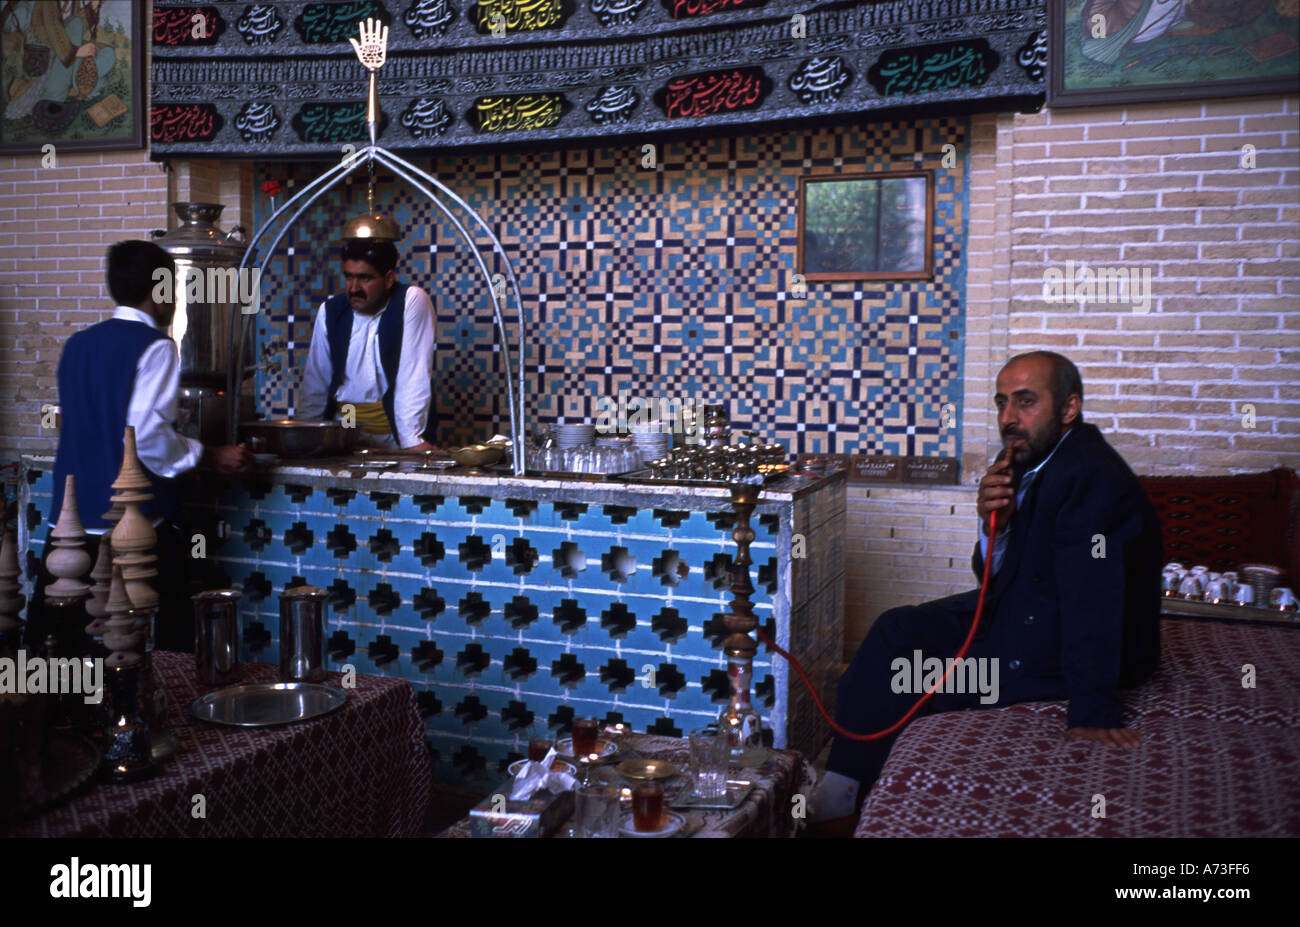 Sala da tè Isfahan Iran casa da tè Esfahan persona fuma acqua pipe saramena Ashura Festival preghiere musulmane su tela a pareti Hassan e Hussein Foto Stock